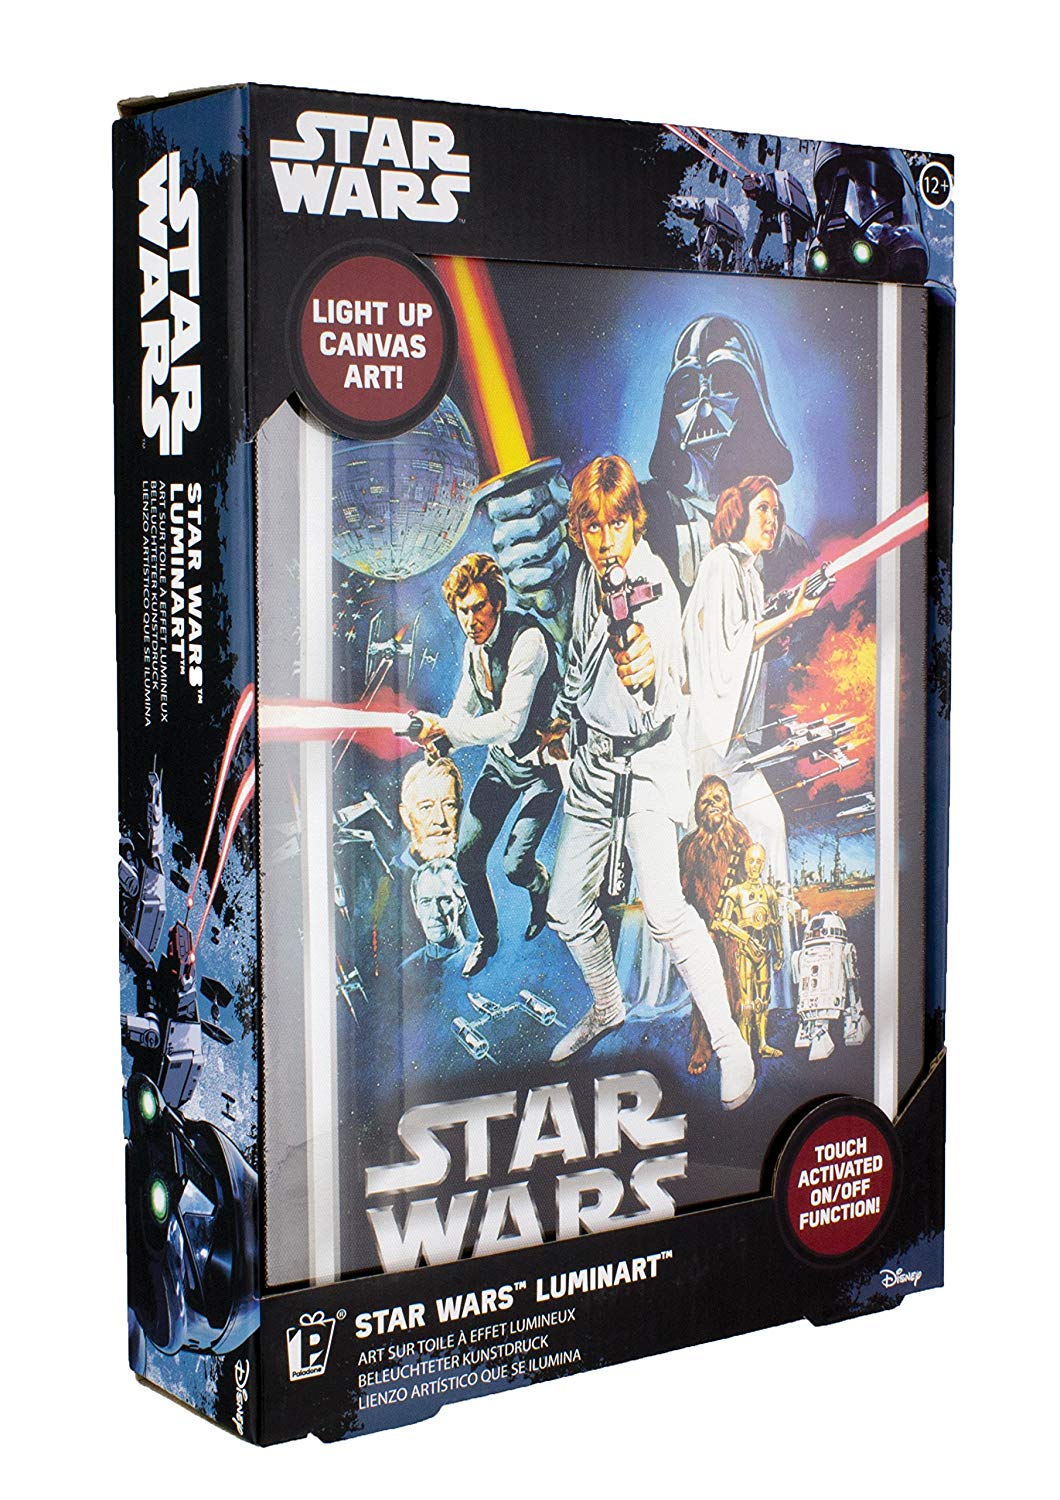 Star Wars Episode IV: A New Hope - Luminart Poster